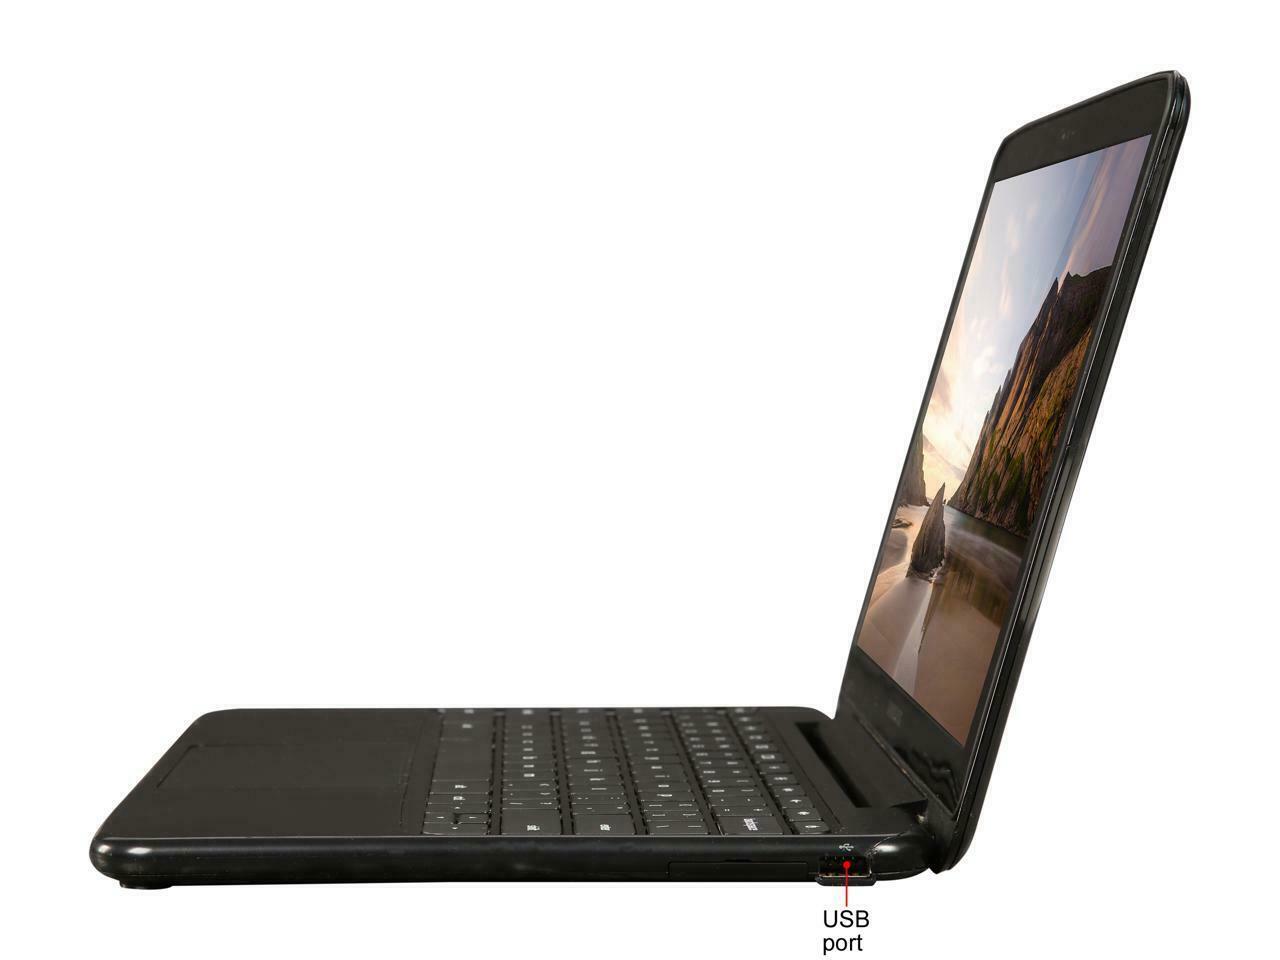 Samsung XE500C21-AZ2US 12" Chromebook, 1.66GHz Intel Celeron, 2GB RAM, 16GB SSD, Chrome, (Grade B)